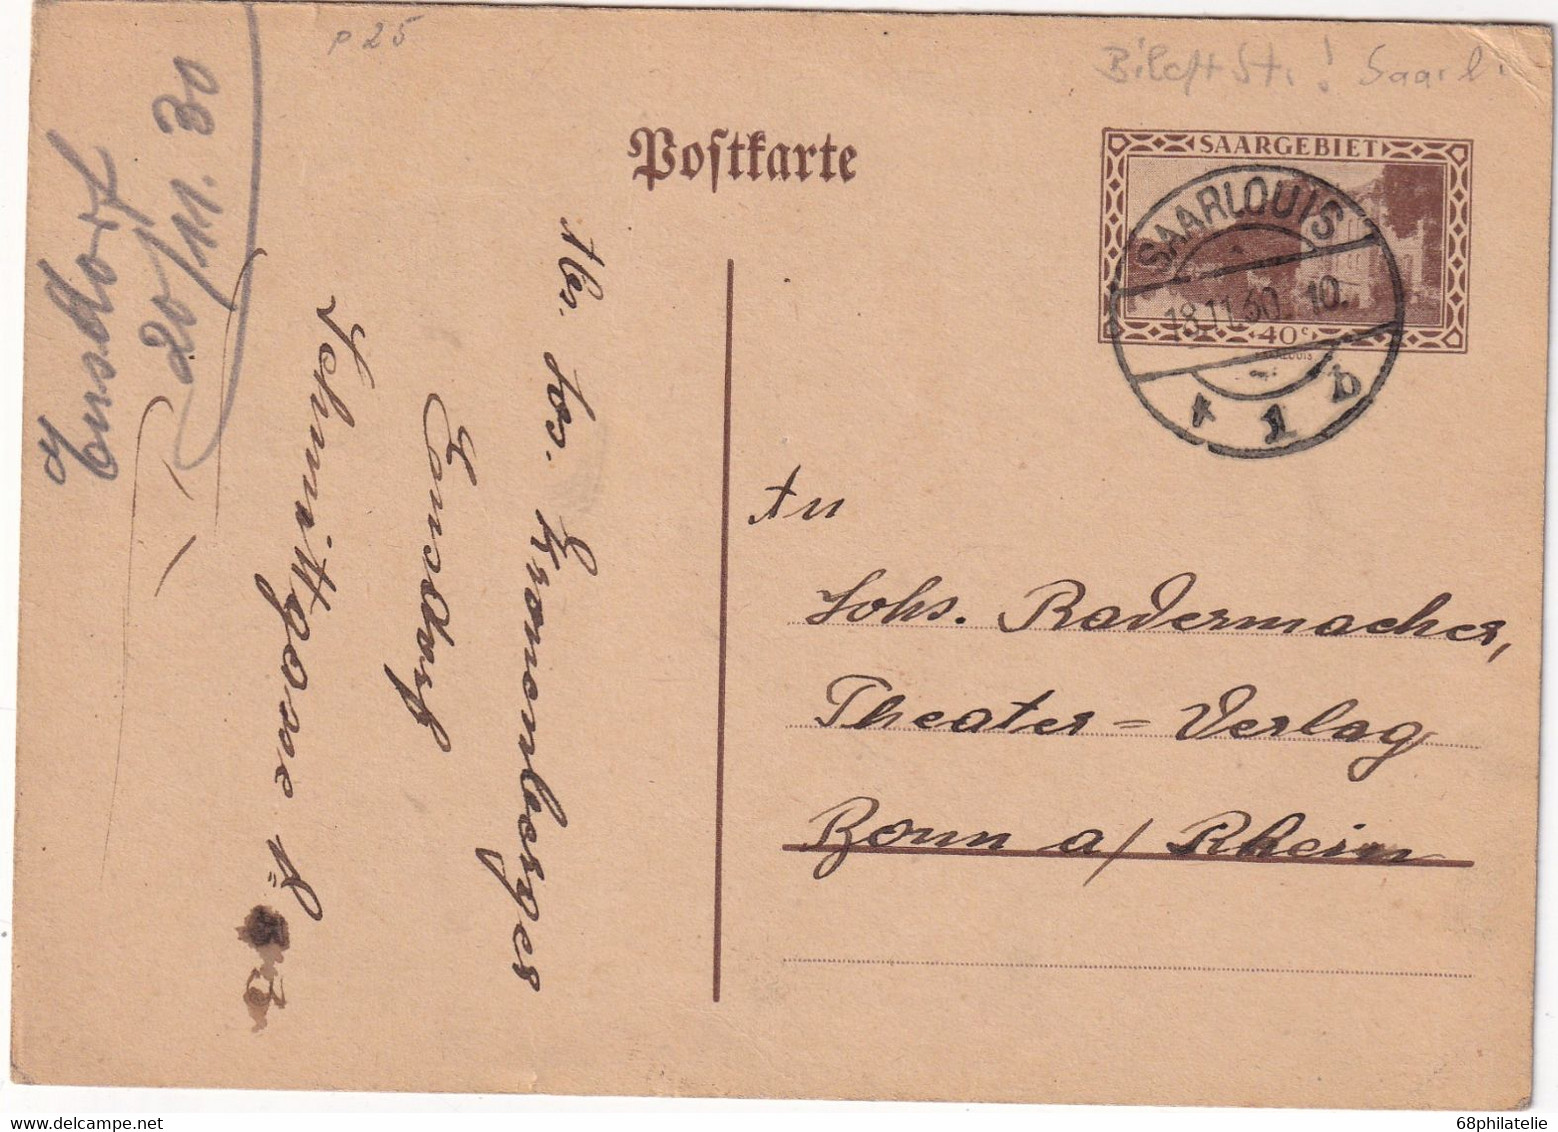 SAARGEBIET 1930    ENTIER POSTAL/GANZSACHE/POSTAL STATIONARY CARTE DE SAARLOUIS - Postal Stationery